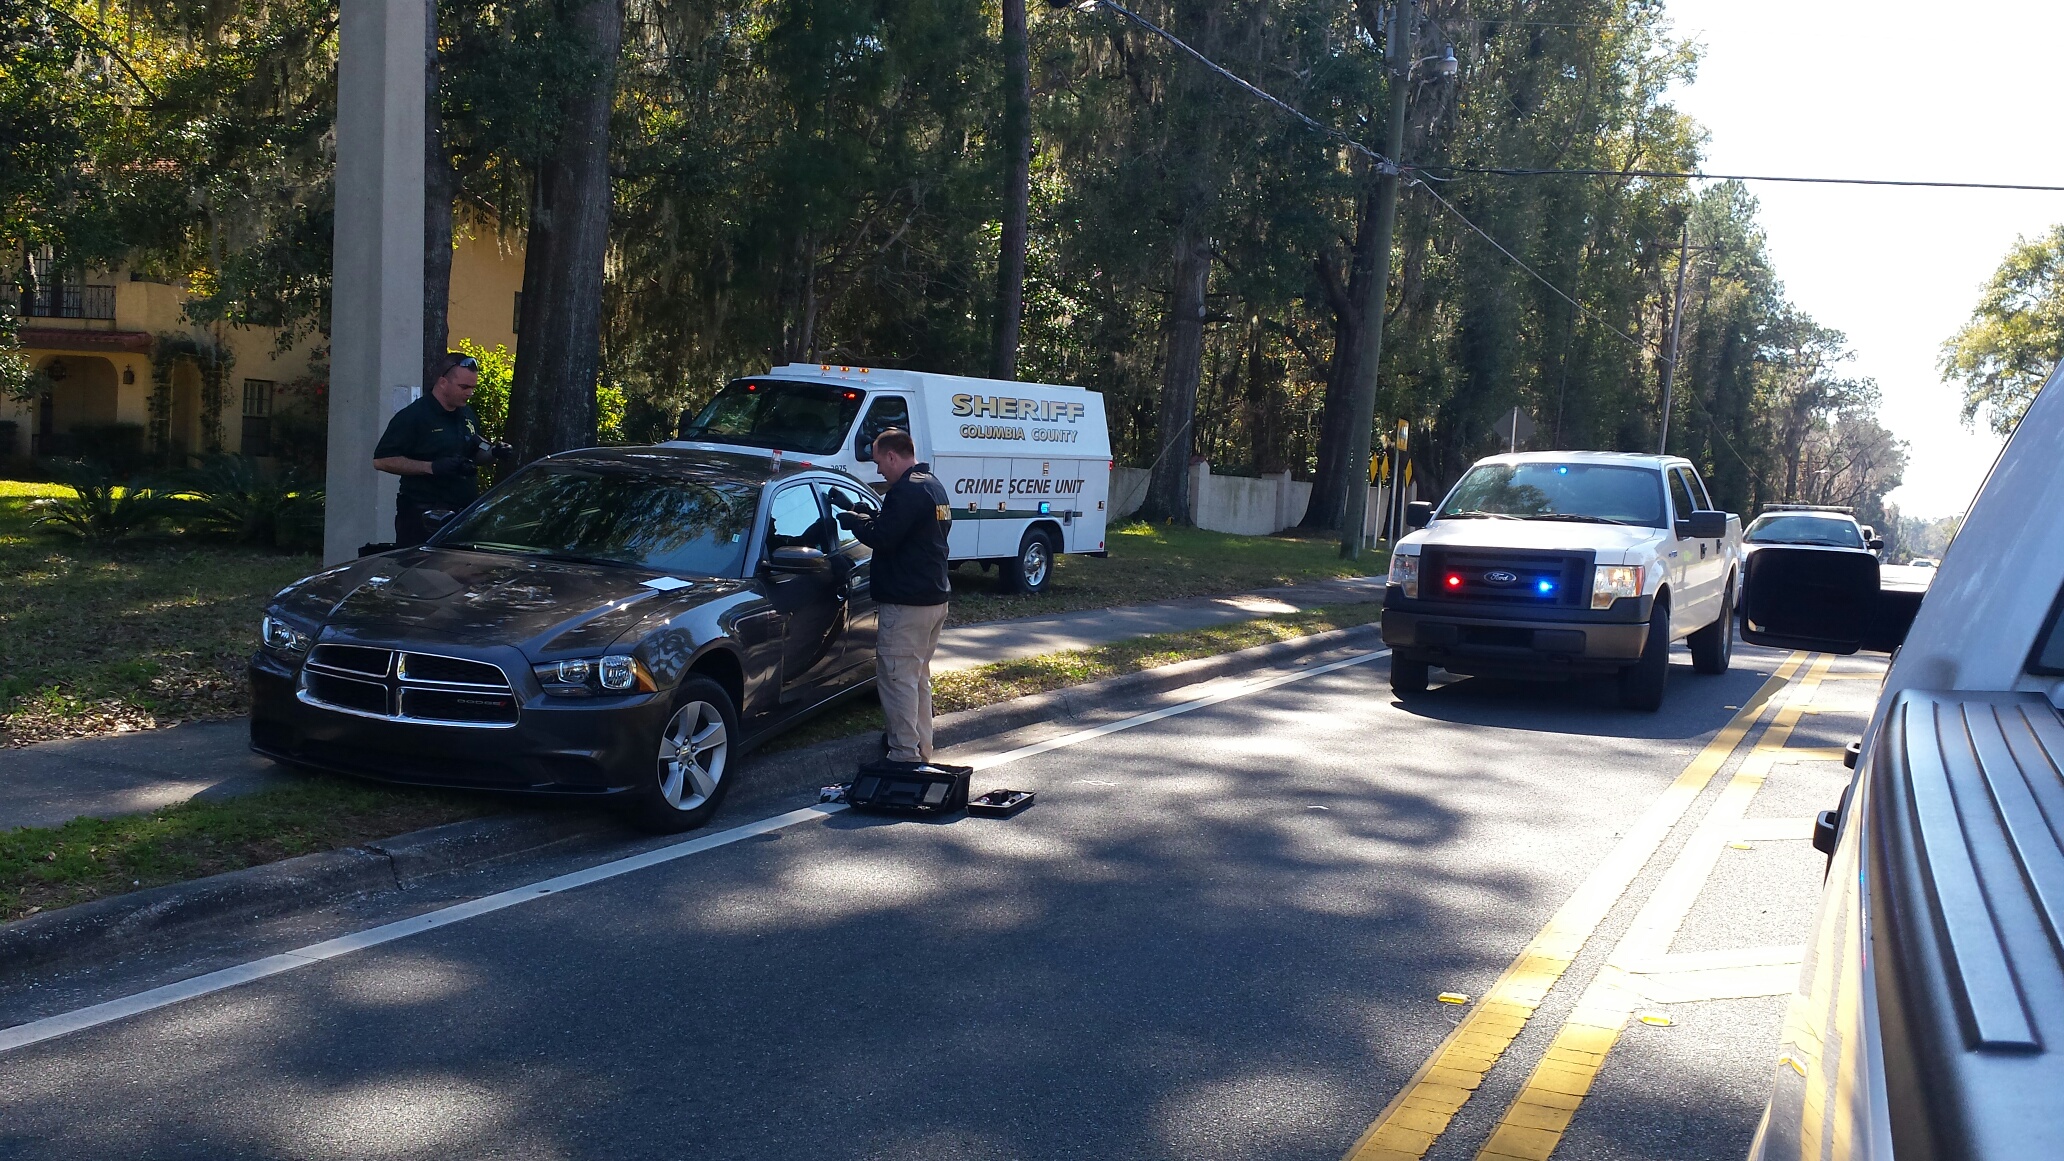 Sheriff's Crime Scene Unit processes the vehicle after the pursuit